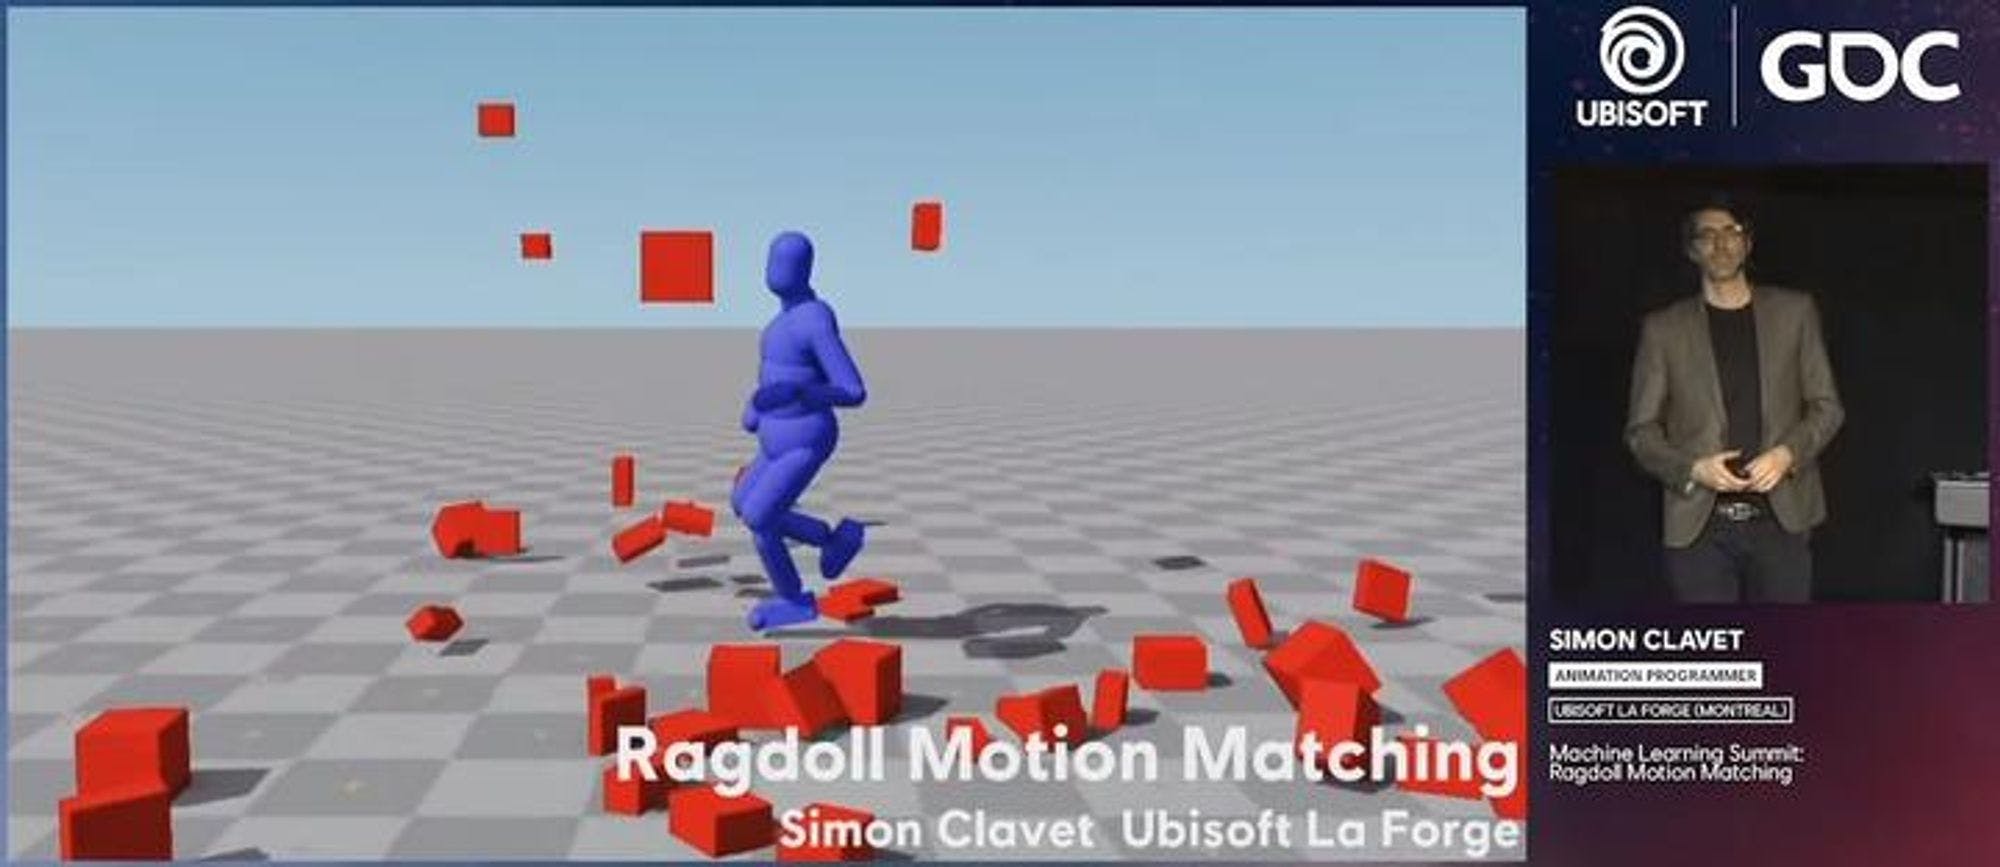 GDC 2020技术导览-Ragdoll Motion Matching